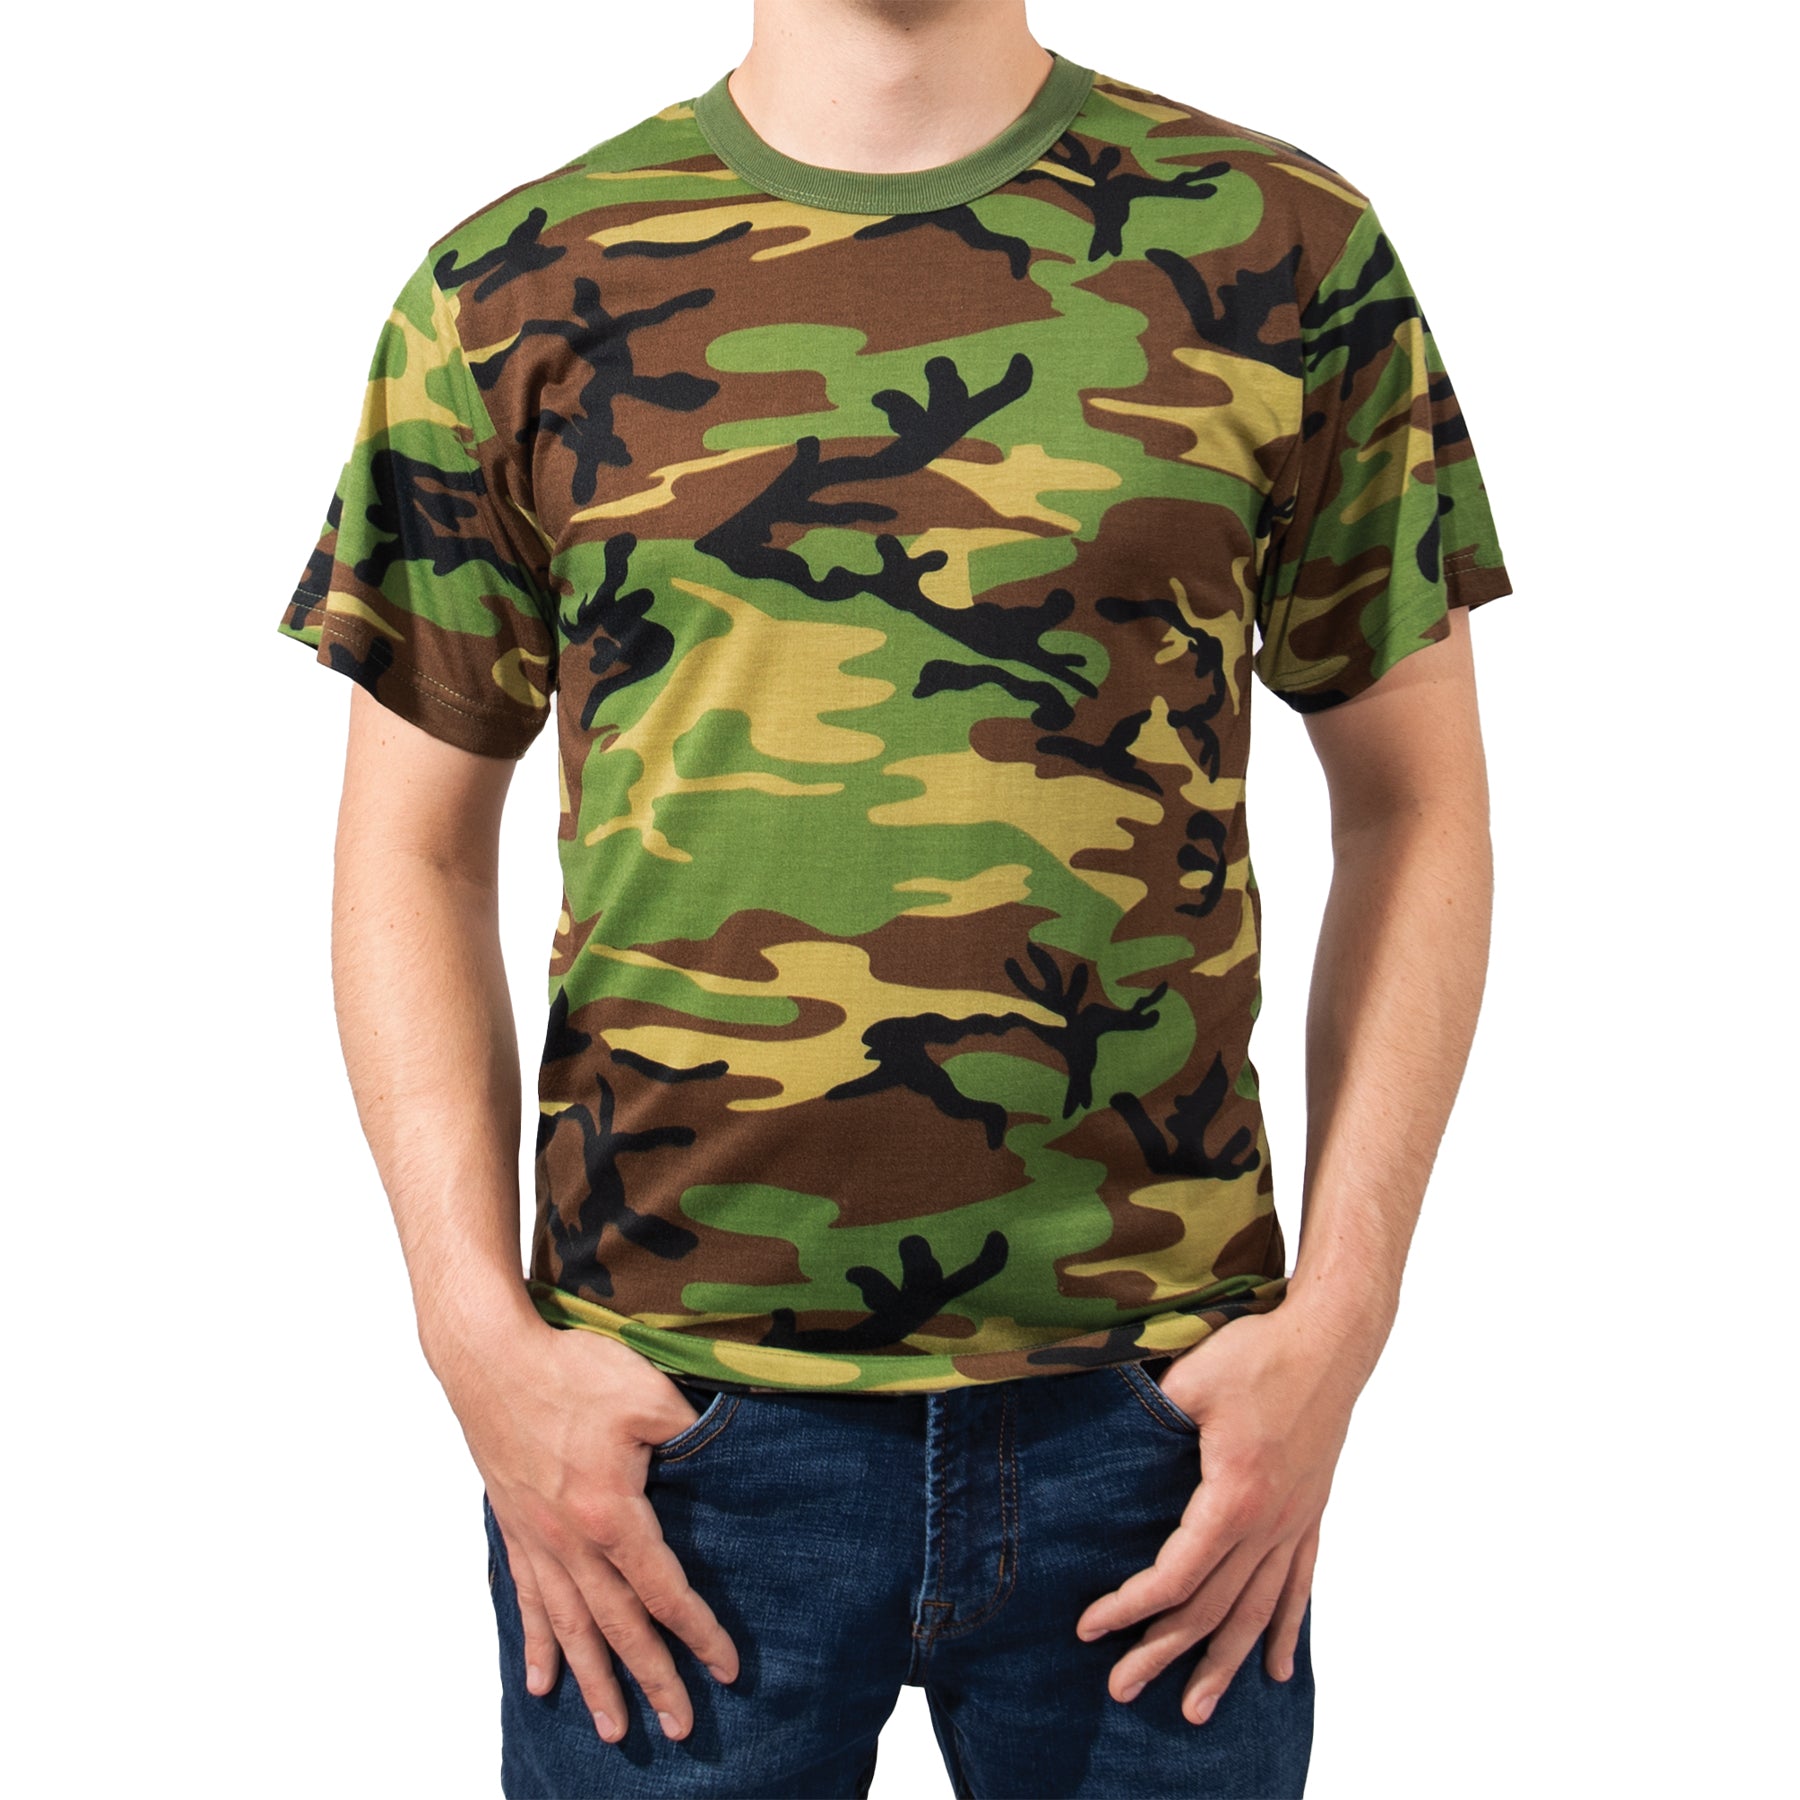 Milspec Moisture Wicking T-Shirts AR 670-1 Compliant Military Gear MilTac Tactical Military Outdoor Gear Australia